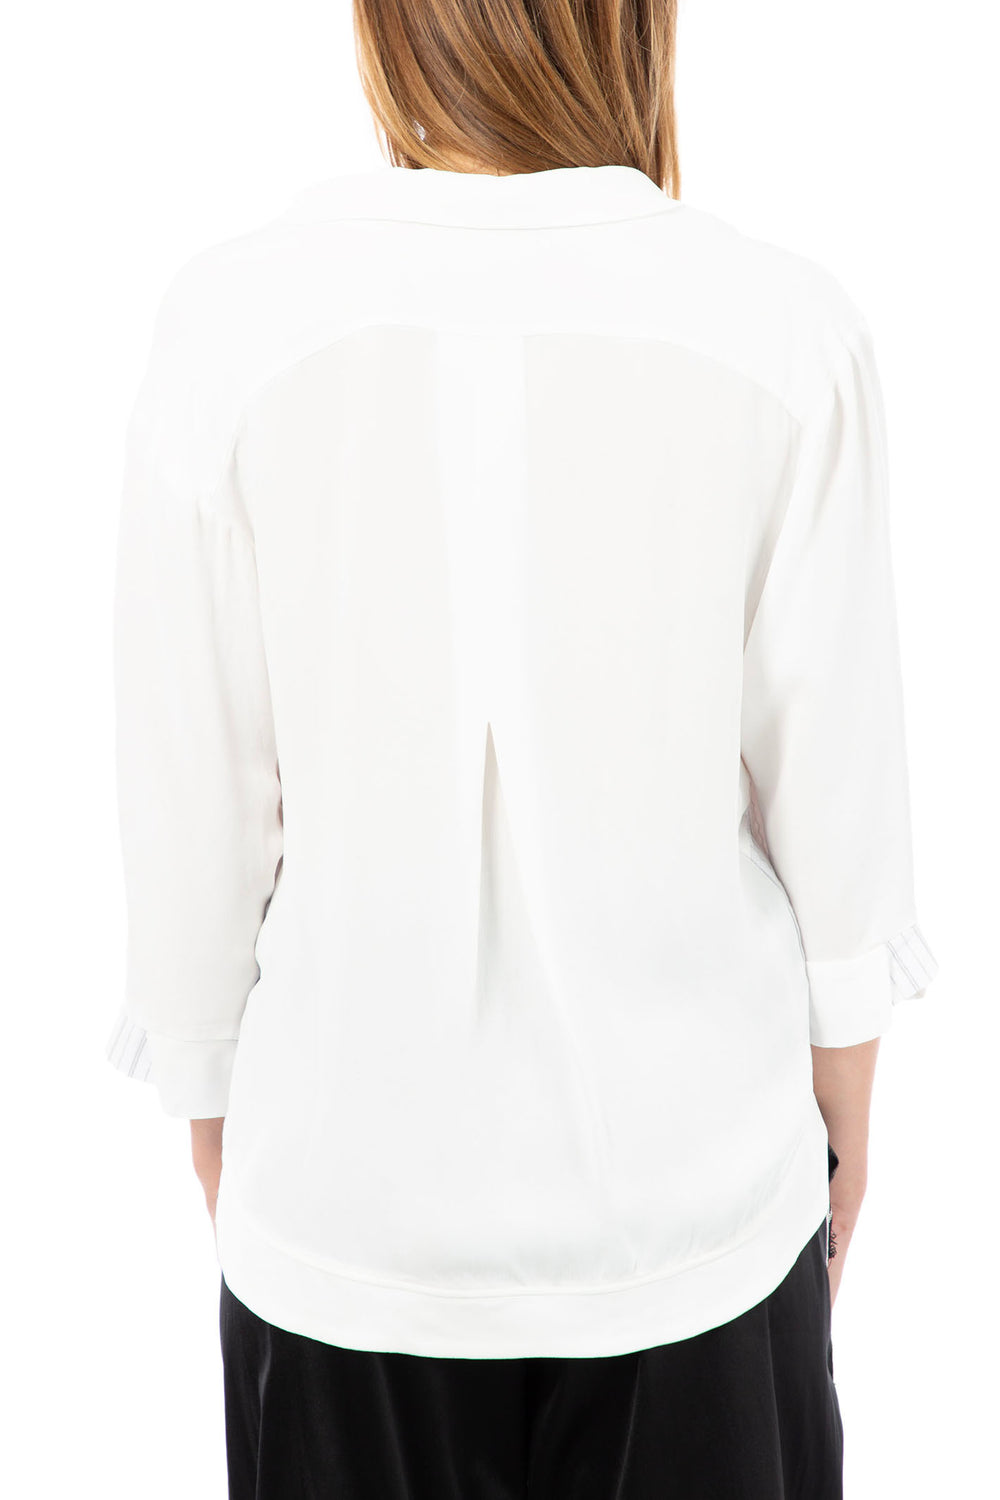 Elisa Cavaletti ELP241063101 Cream Lace Detail Shirt - Experience Boutique